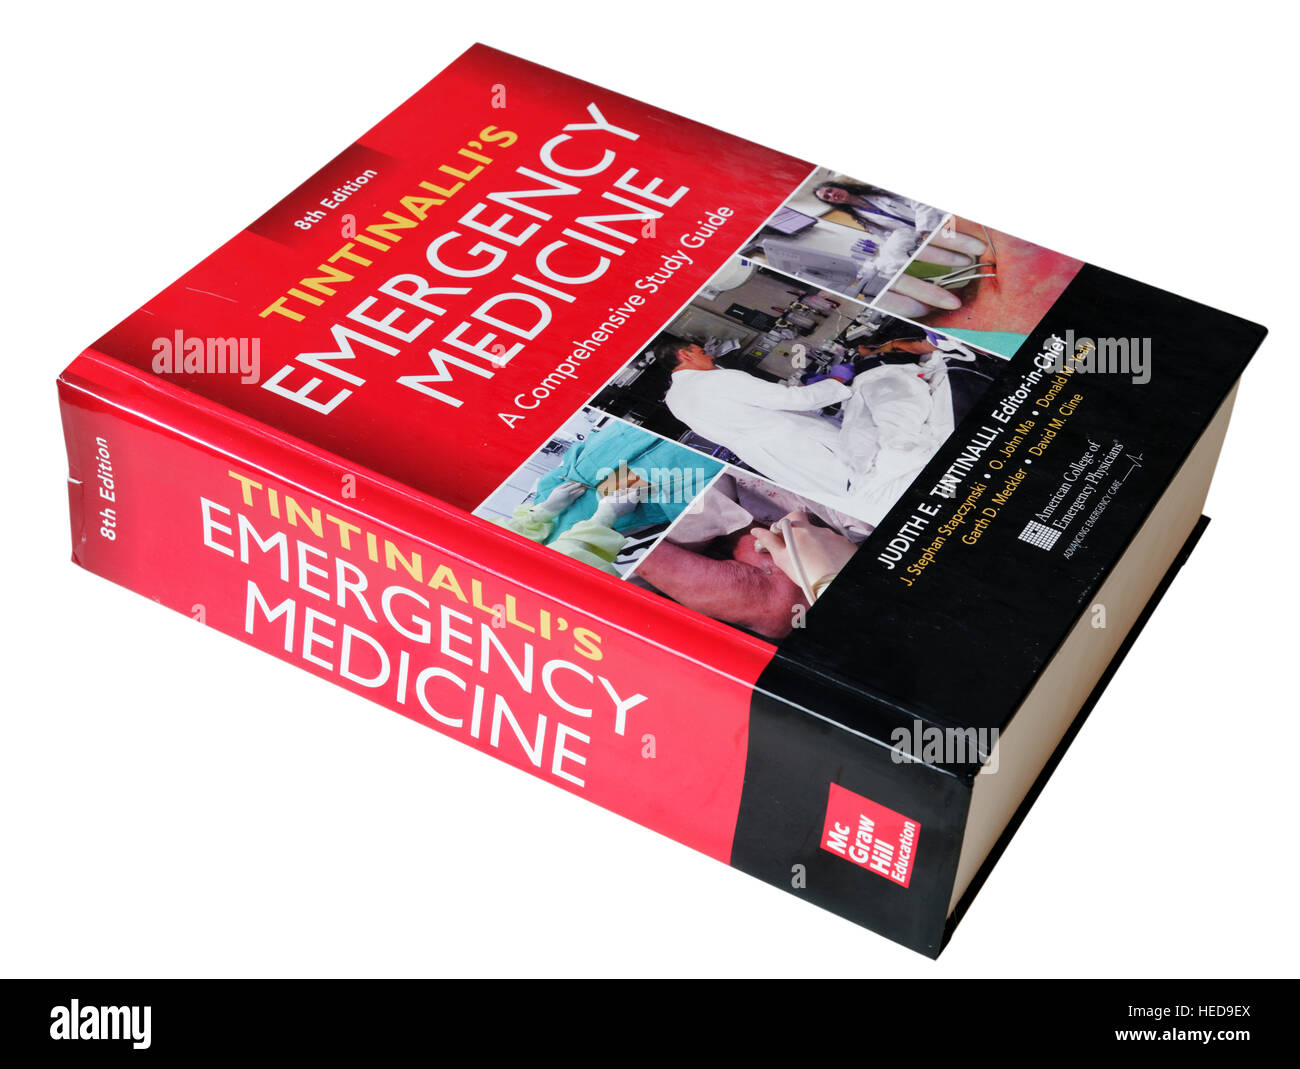 Tintinalli ouvrage médical Médecine d'urgence Photo Stock - Alamy